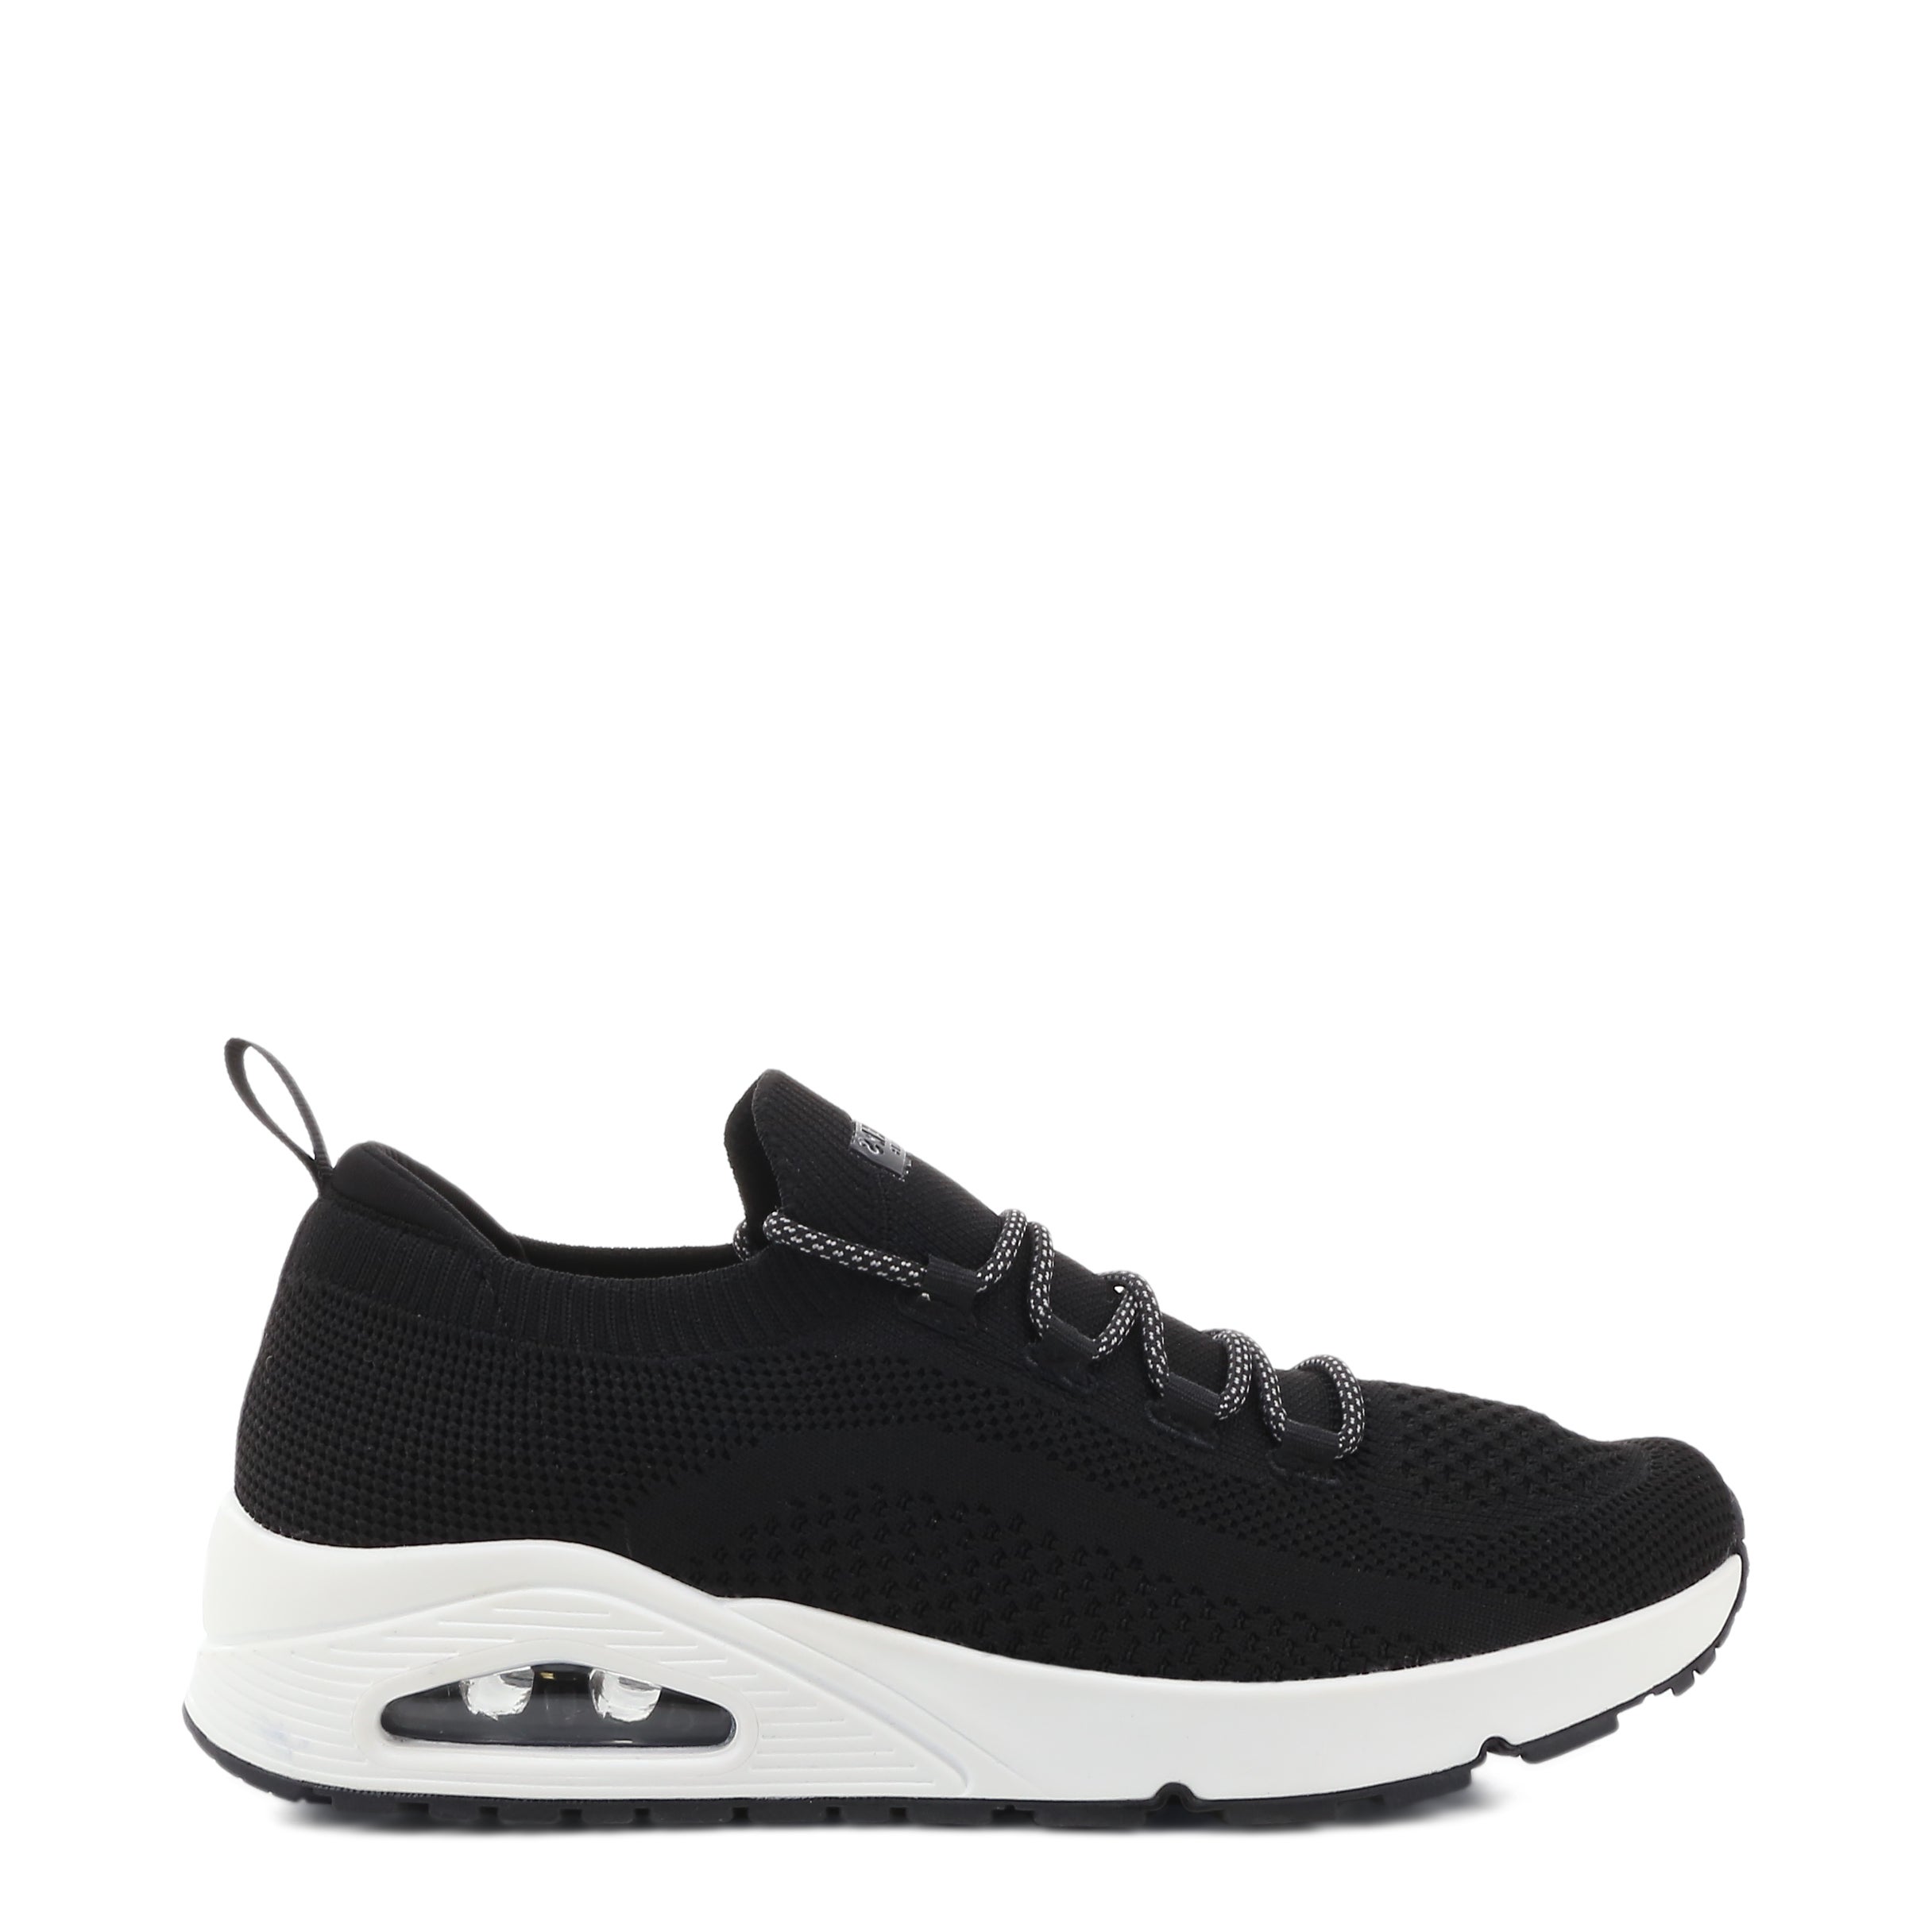 Uno Everywear Men's Sneakers in Black White